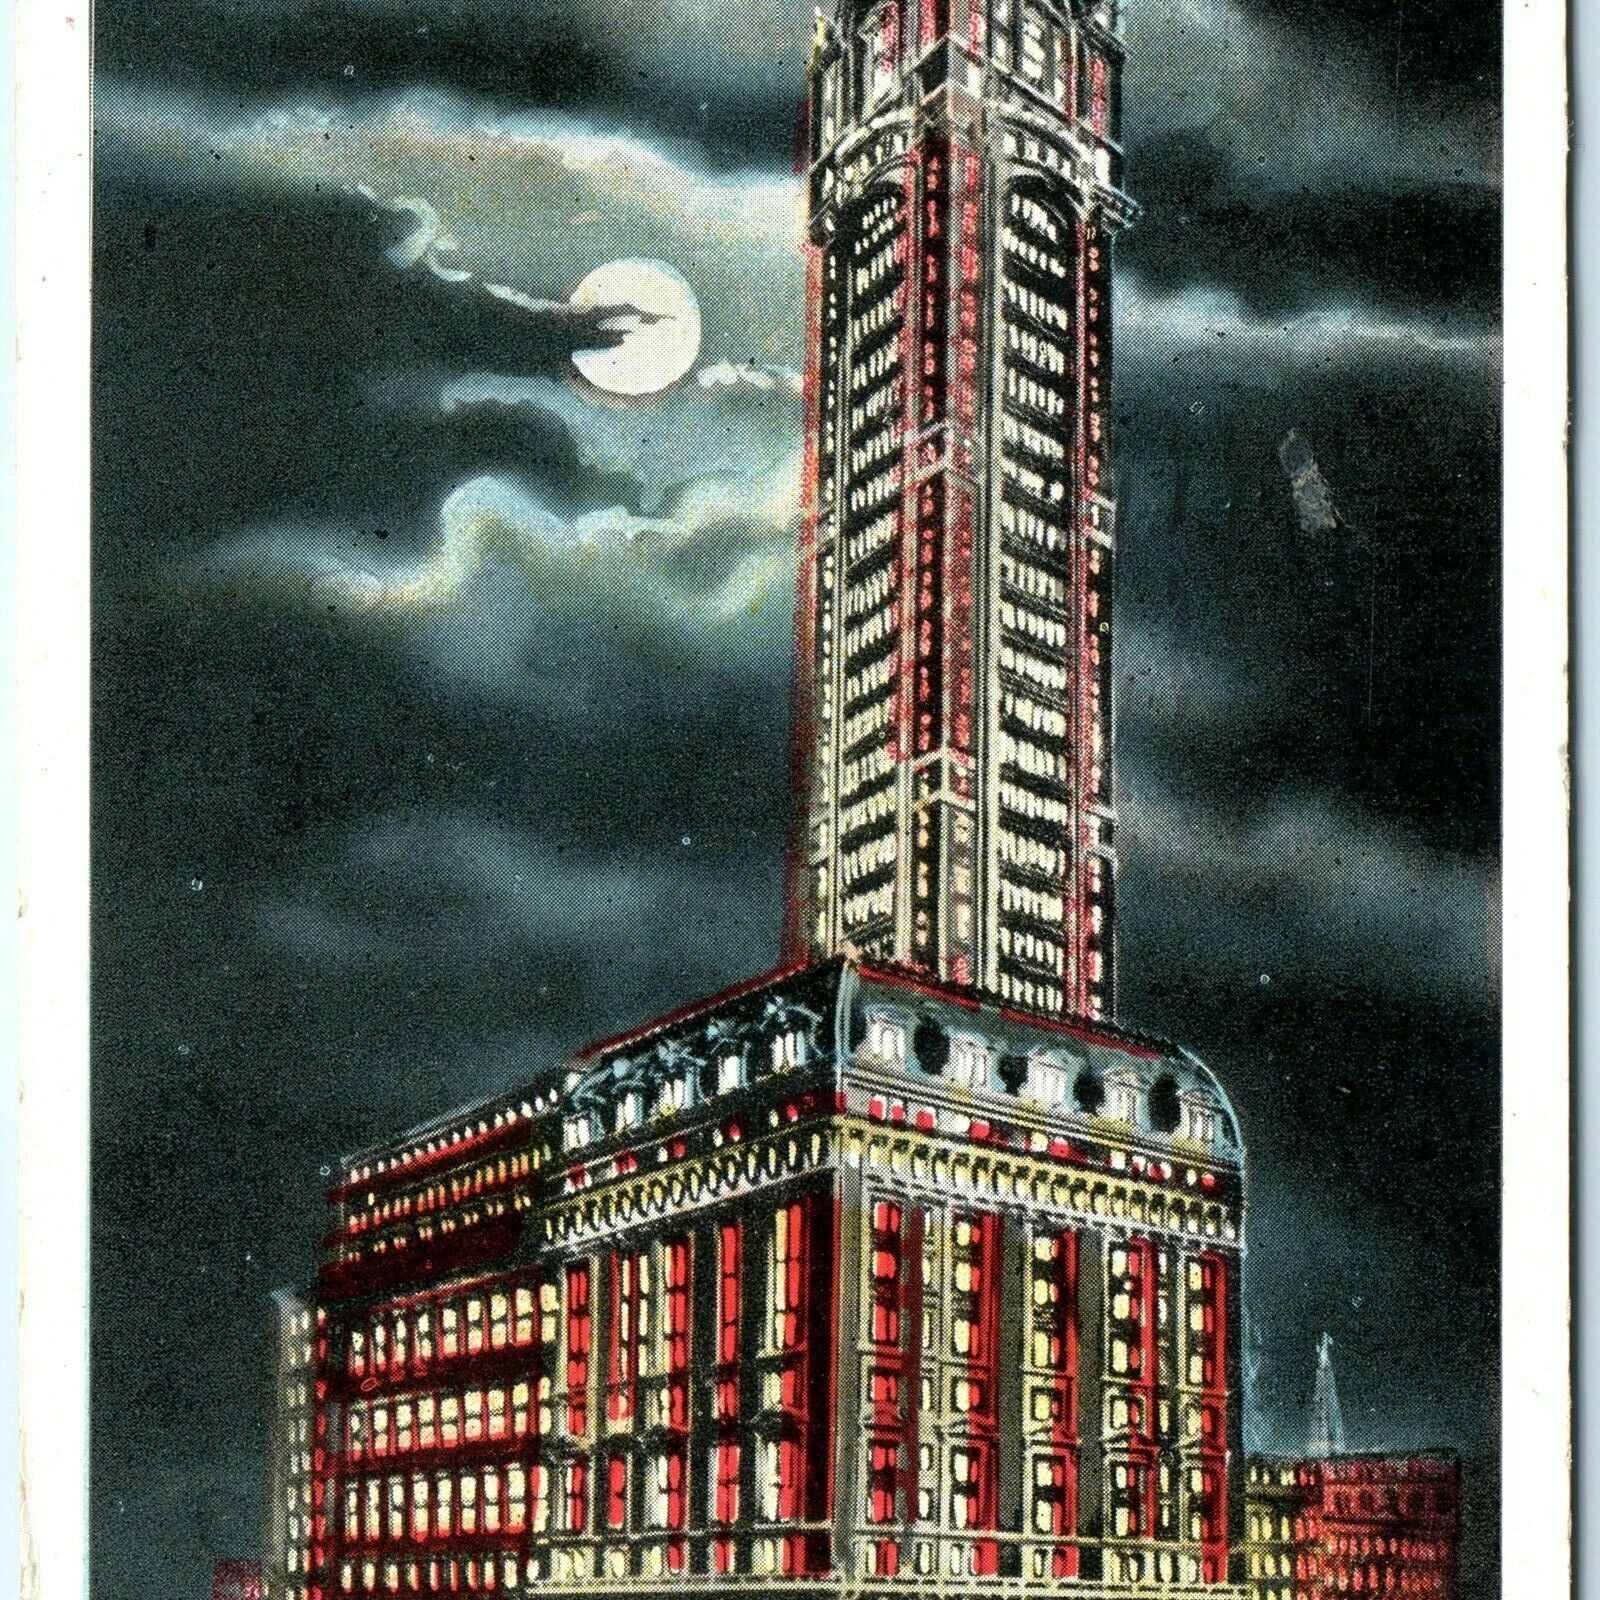 c1910s New York City @ Night Singer Building Litho Photo Postcard Cars Moon A33